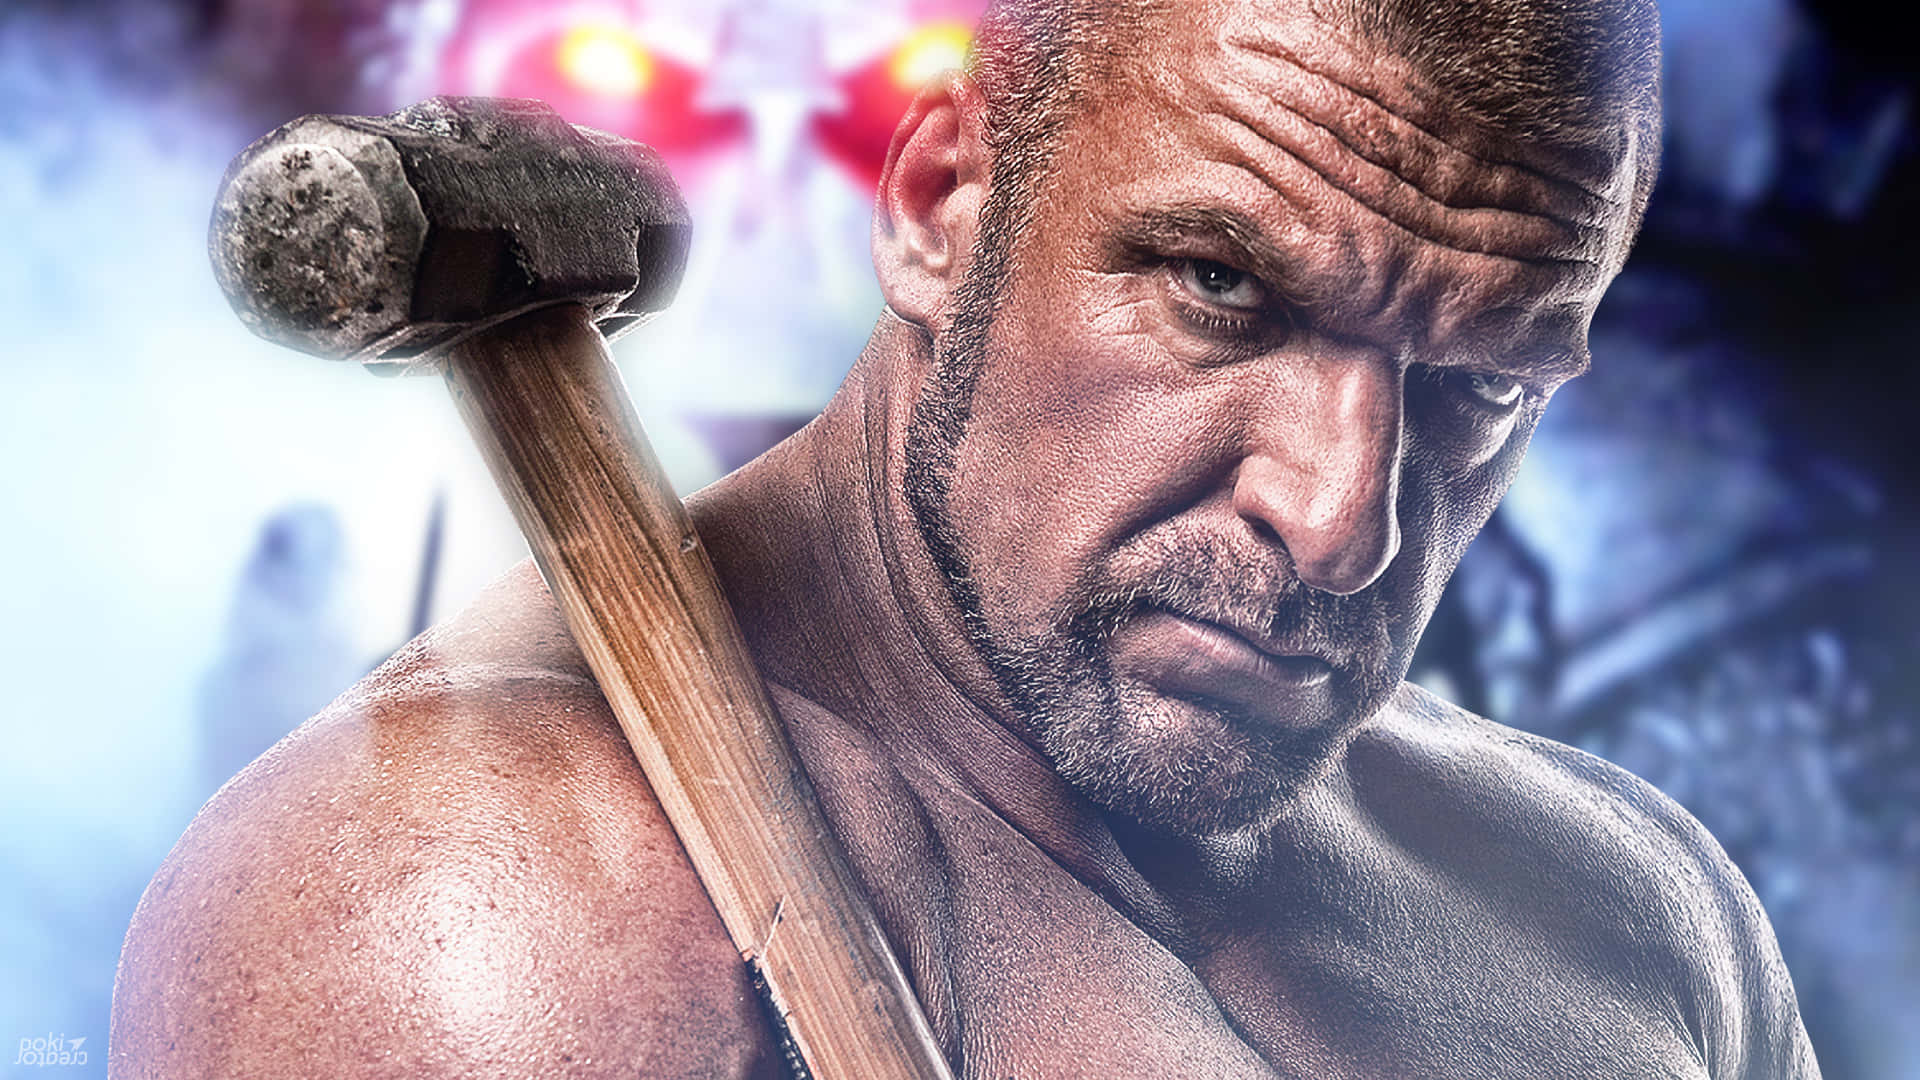 Triple H Holding A Sledgehammer Background